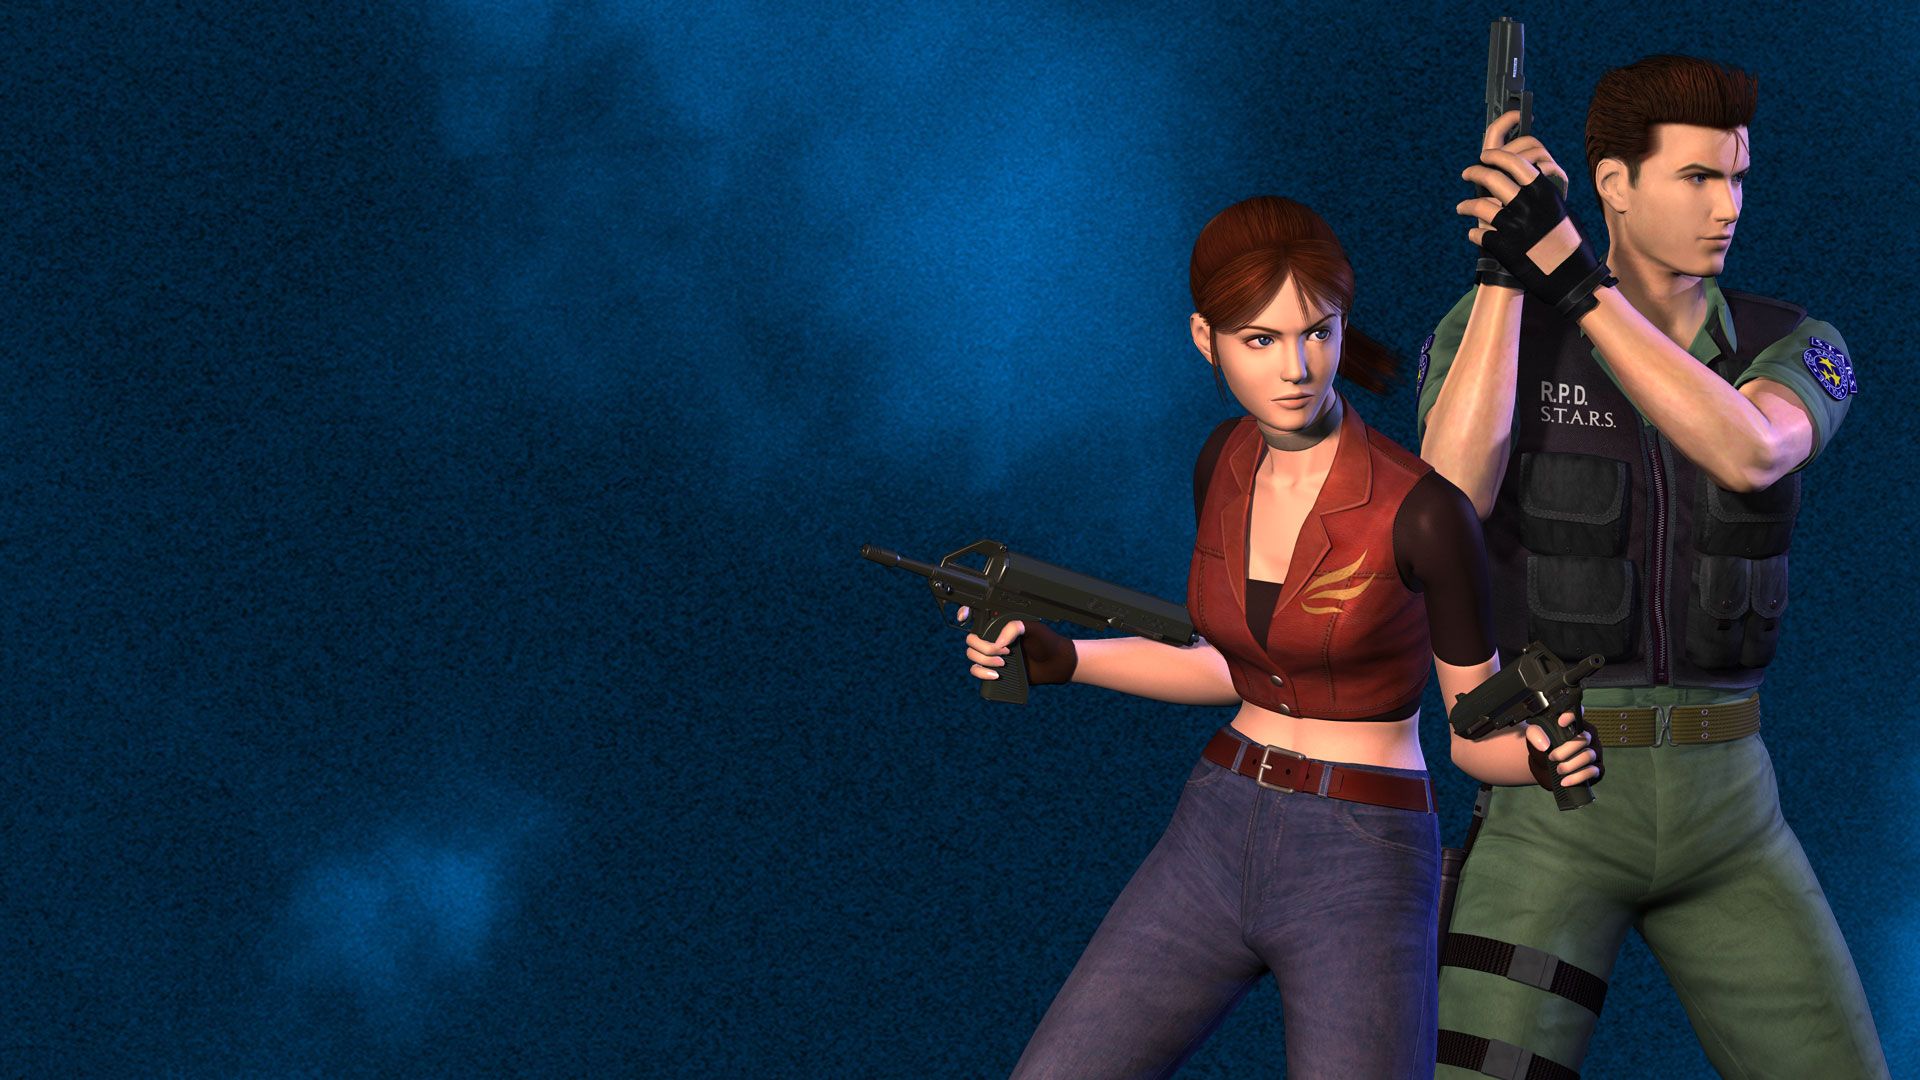 Resident Evil CODE: Veronica X HD Trailer